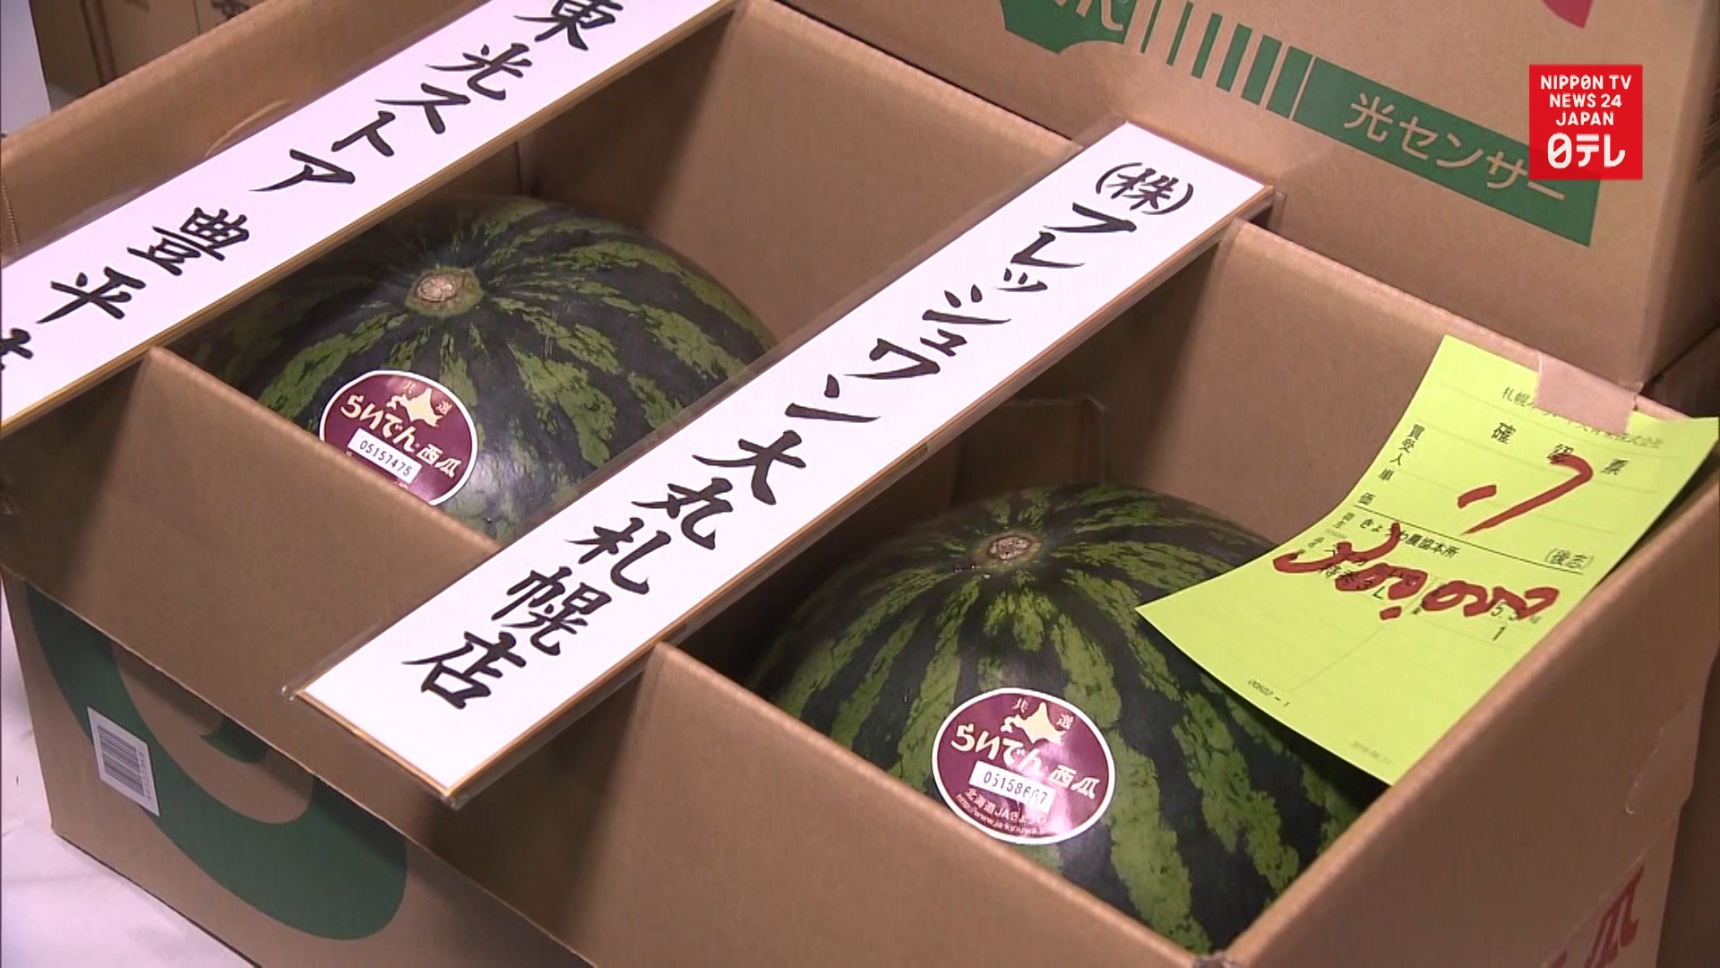 Japan's Super Expensive Seasonal Watermelons